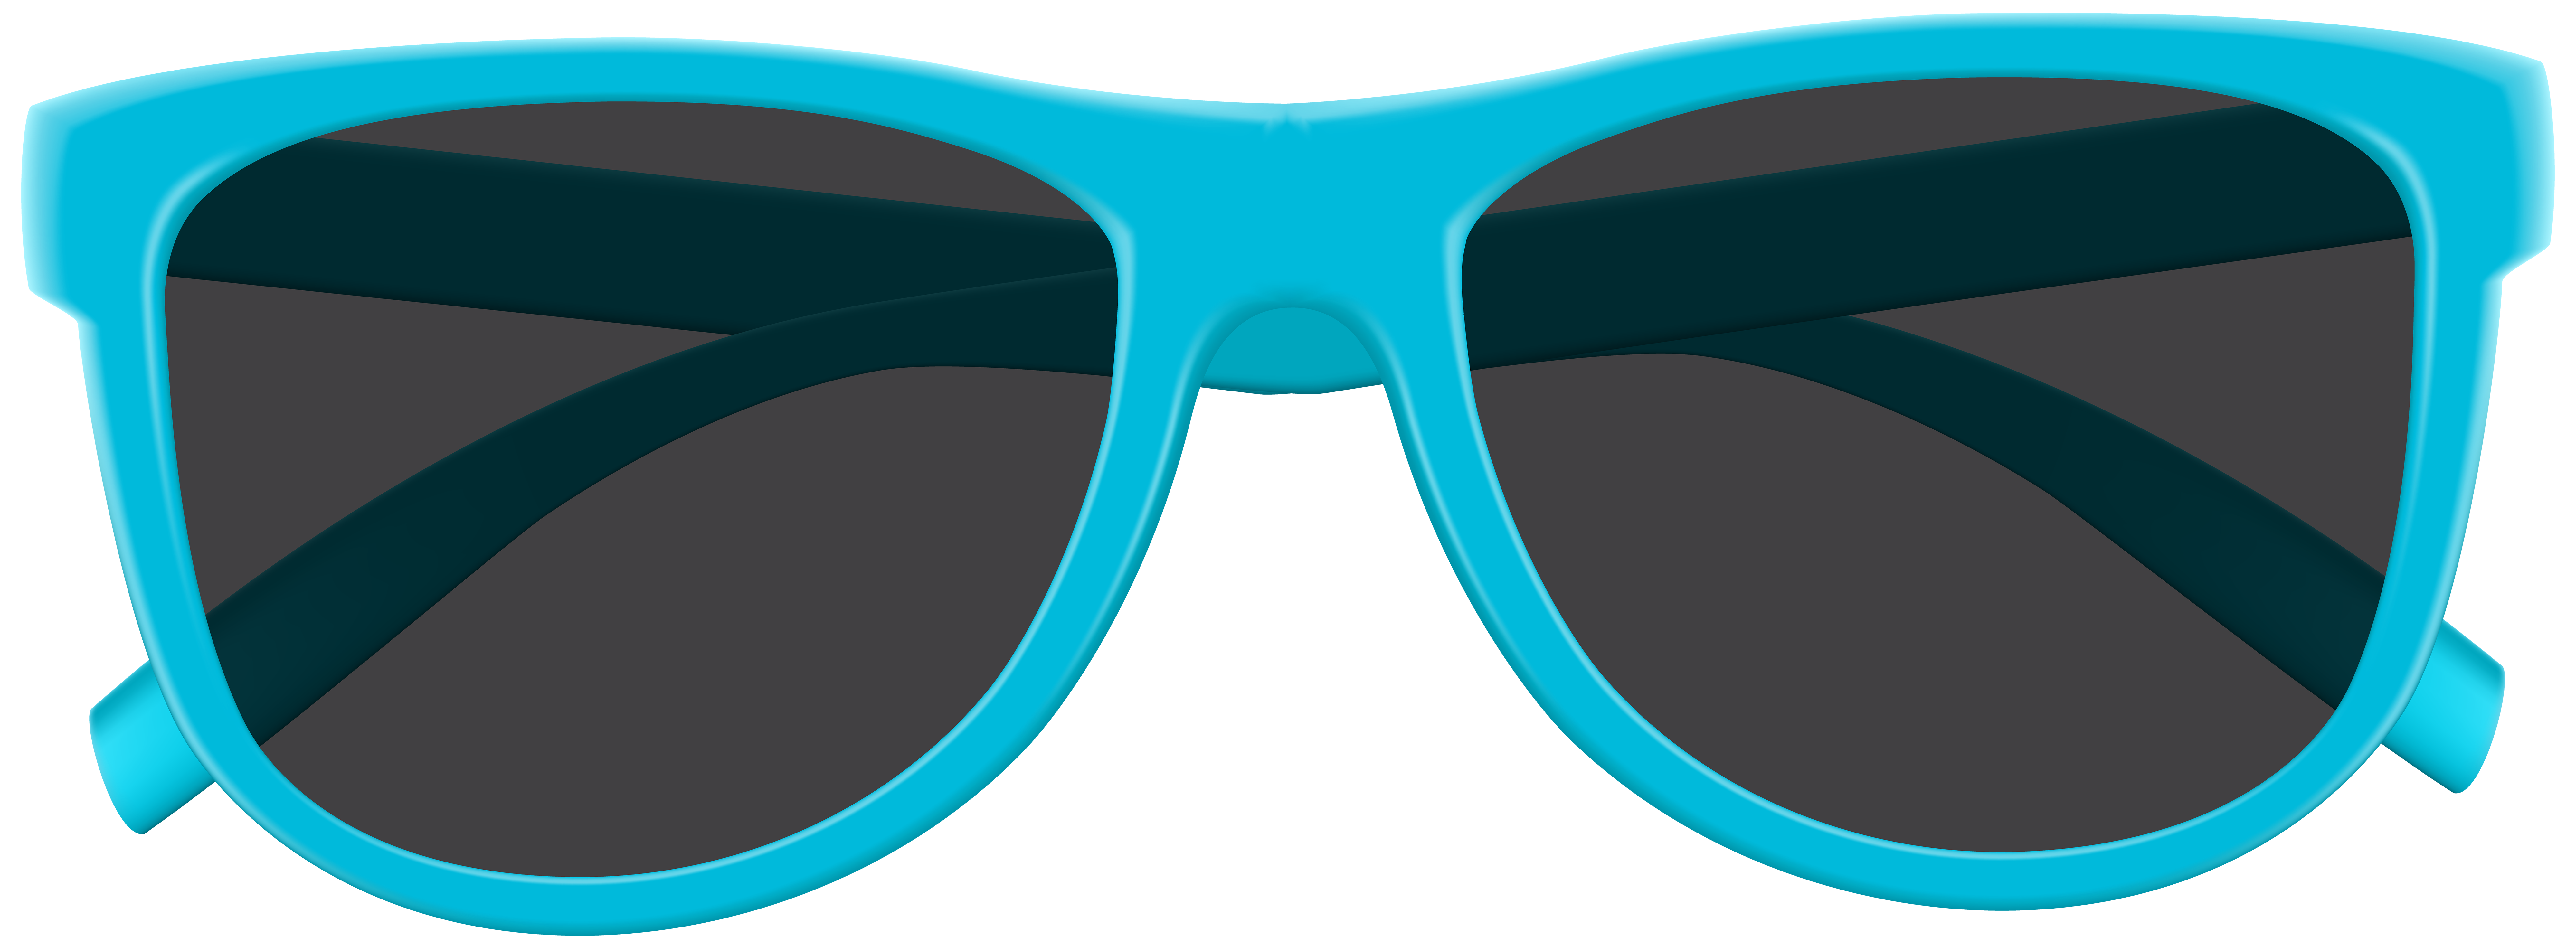 Blue Sunglasses PNG Clip Art Image.